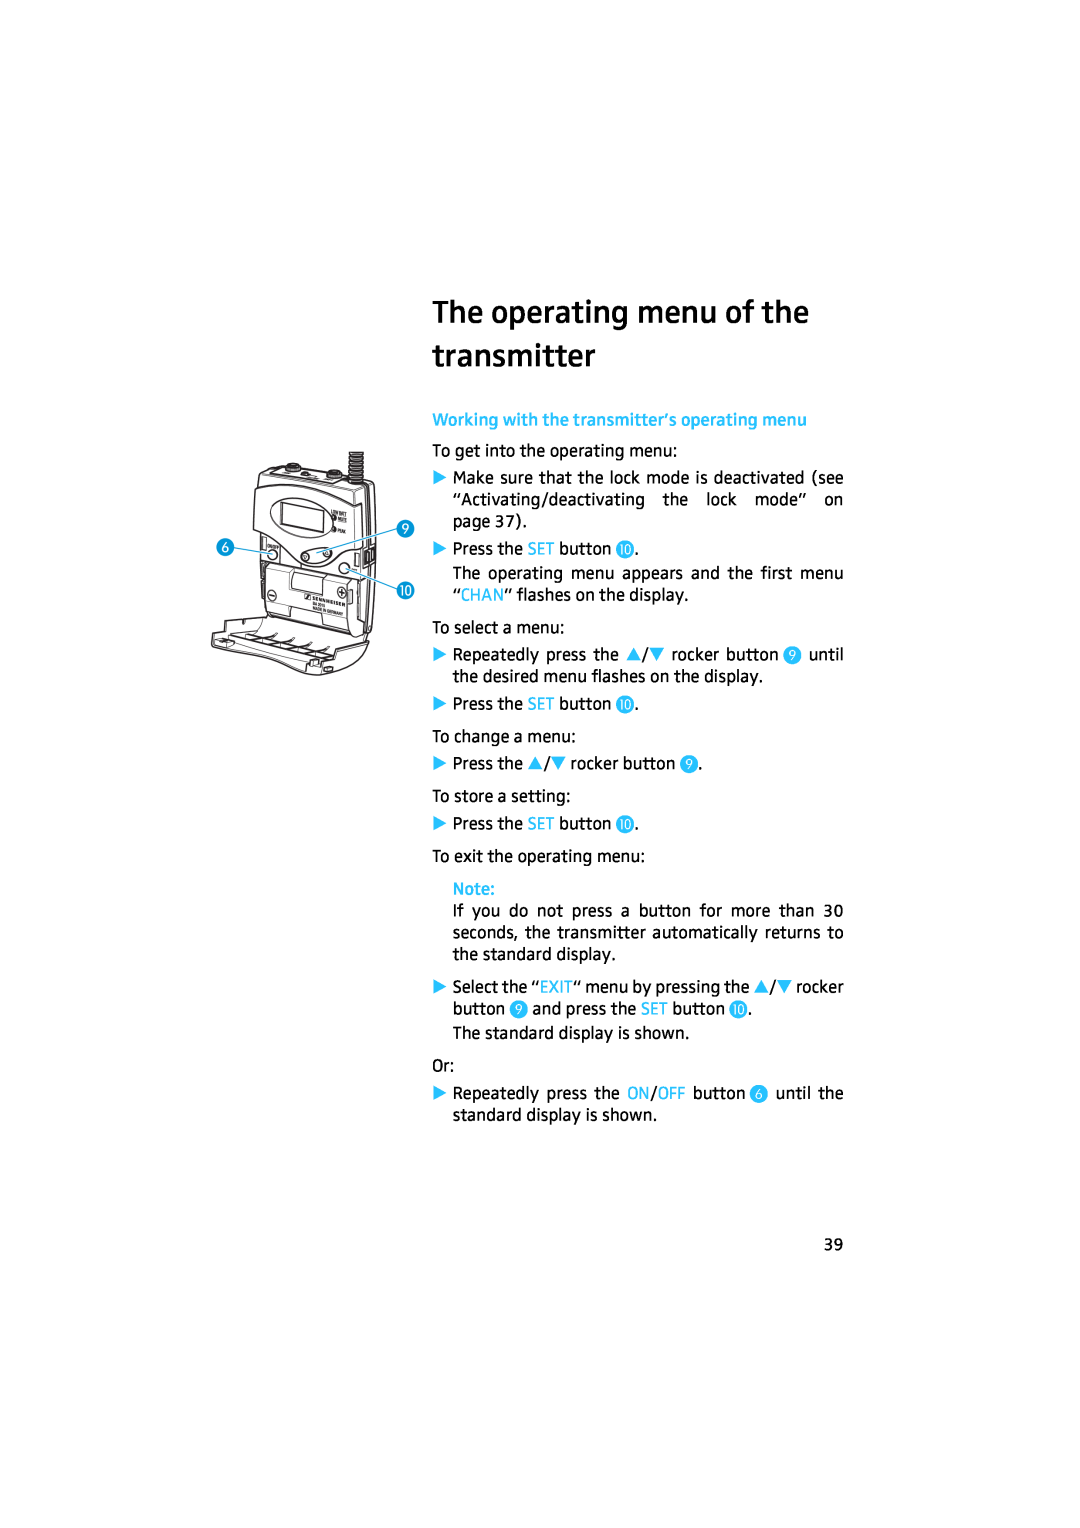 Sennheiser 2020 manual The operating menu of the transmitter 